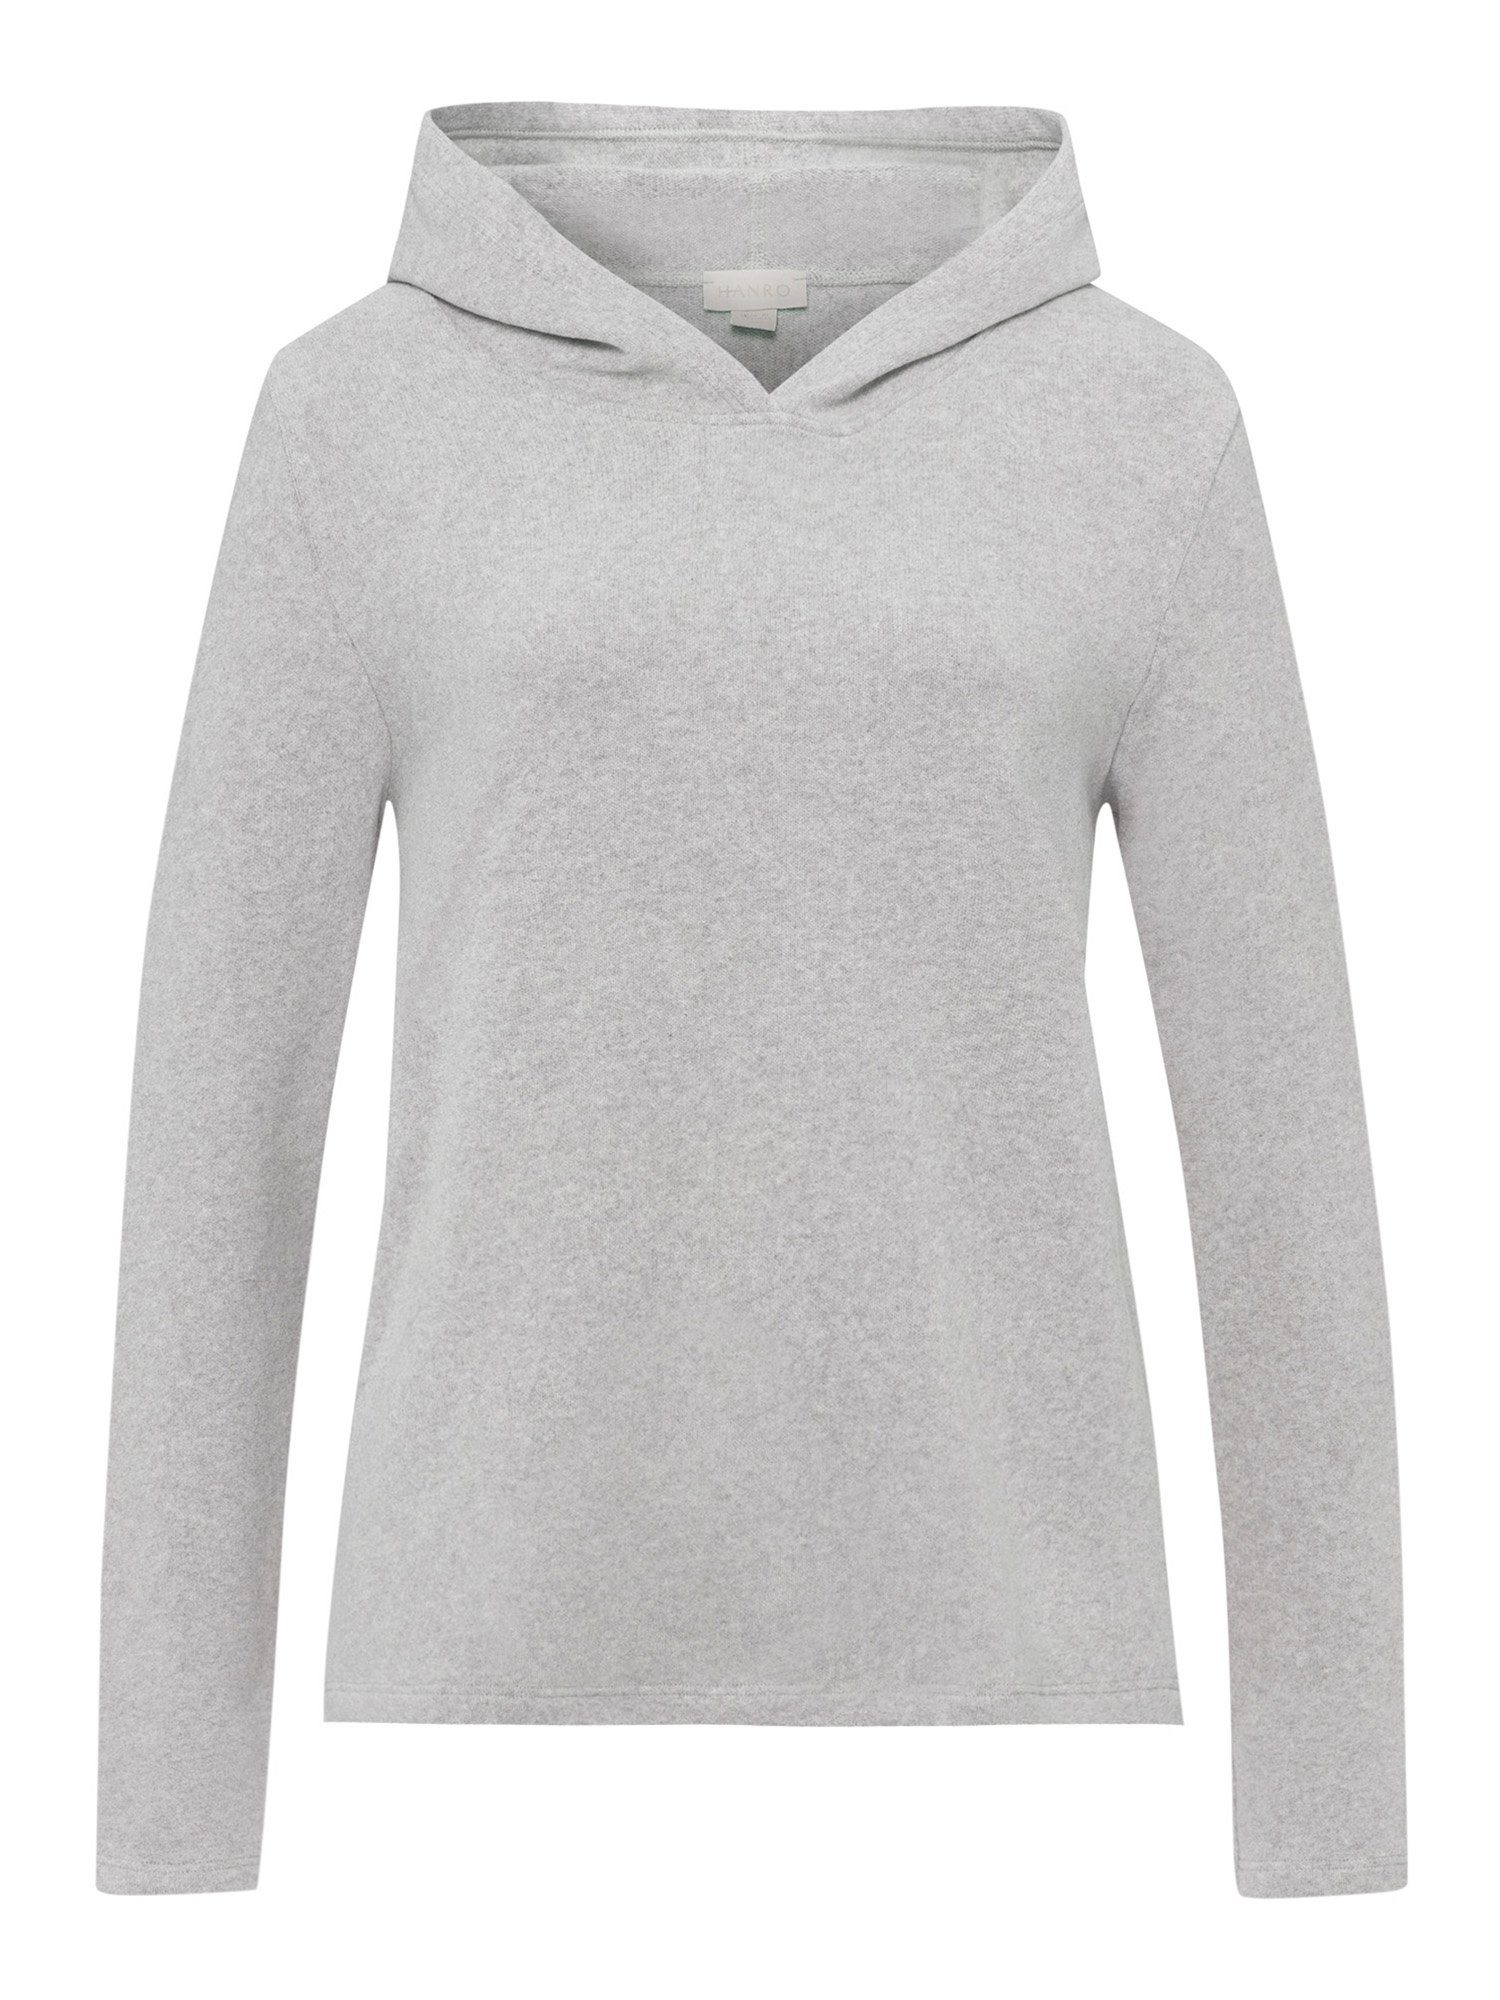 Hanro Sweatshirt Easywear classic grey melange